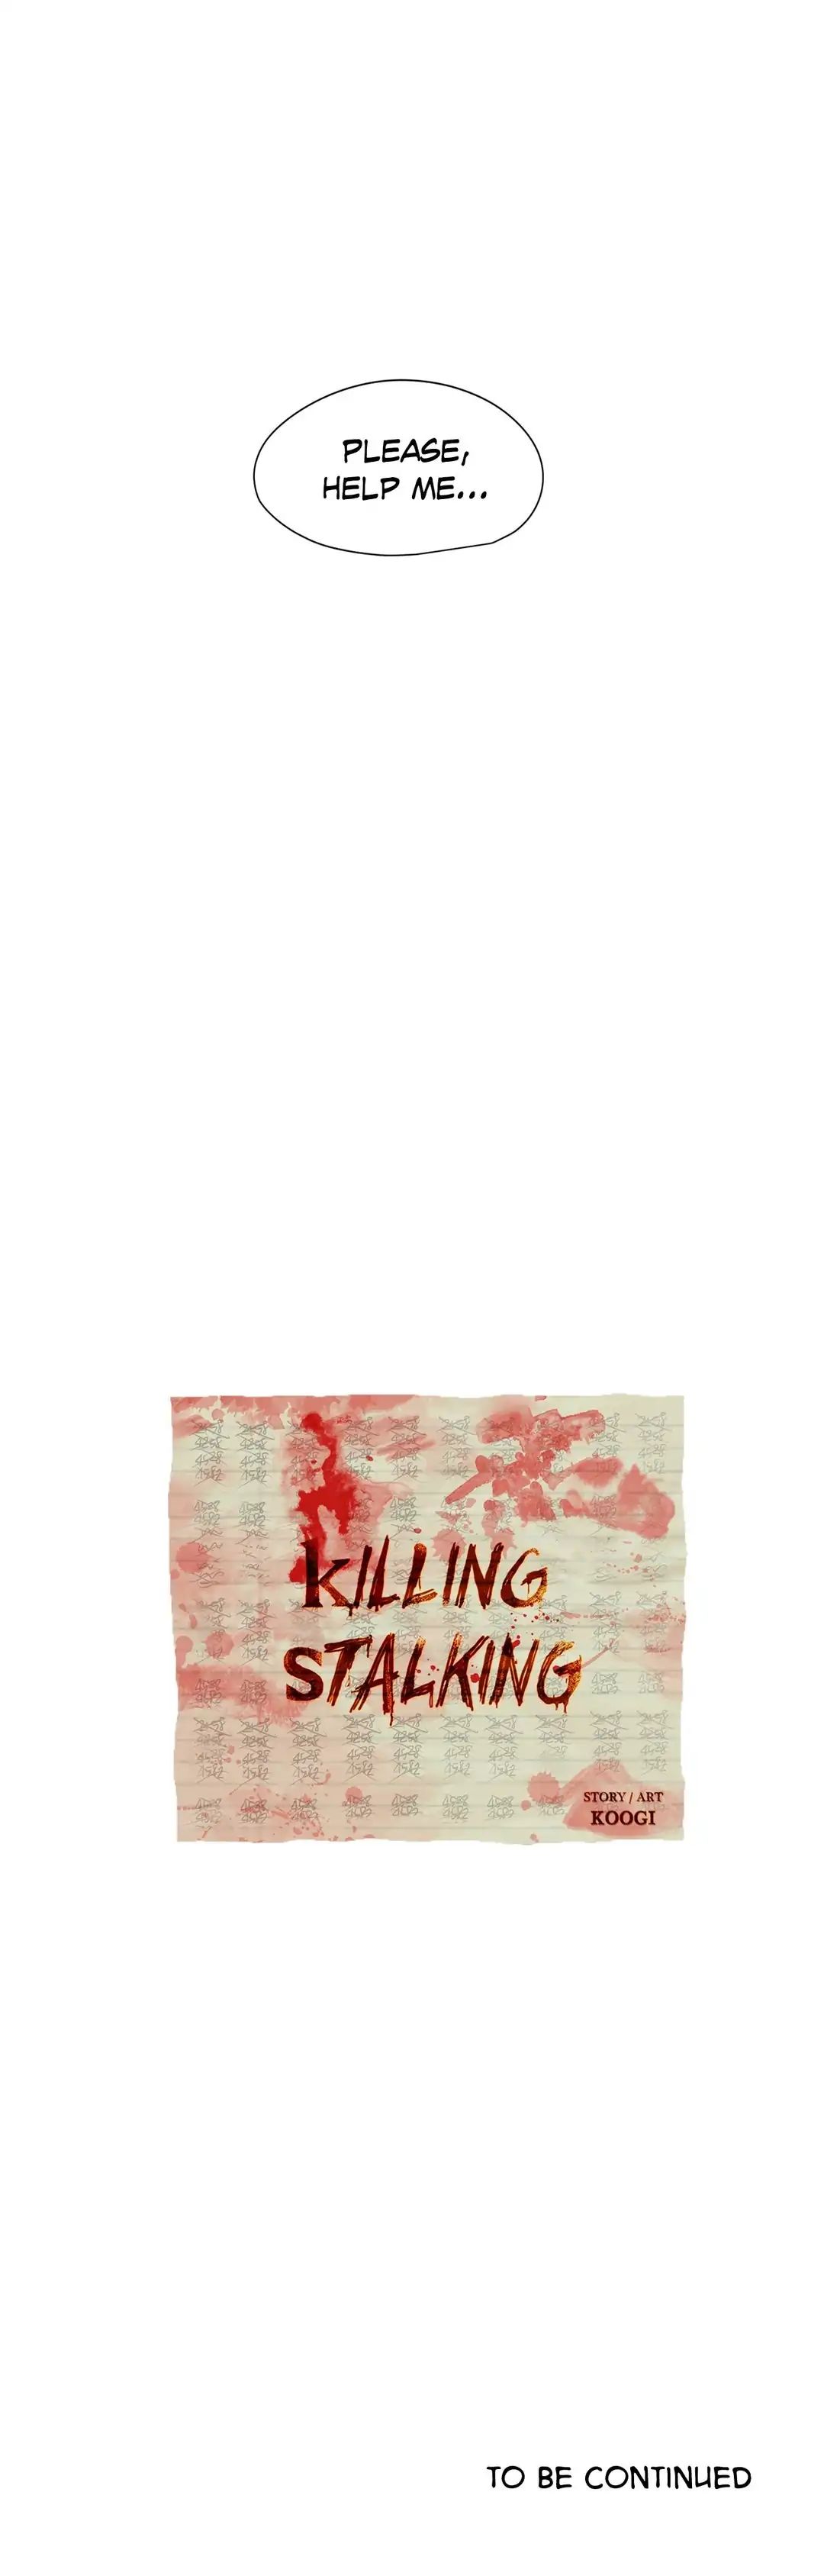 Killing Stalking image